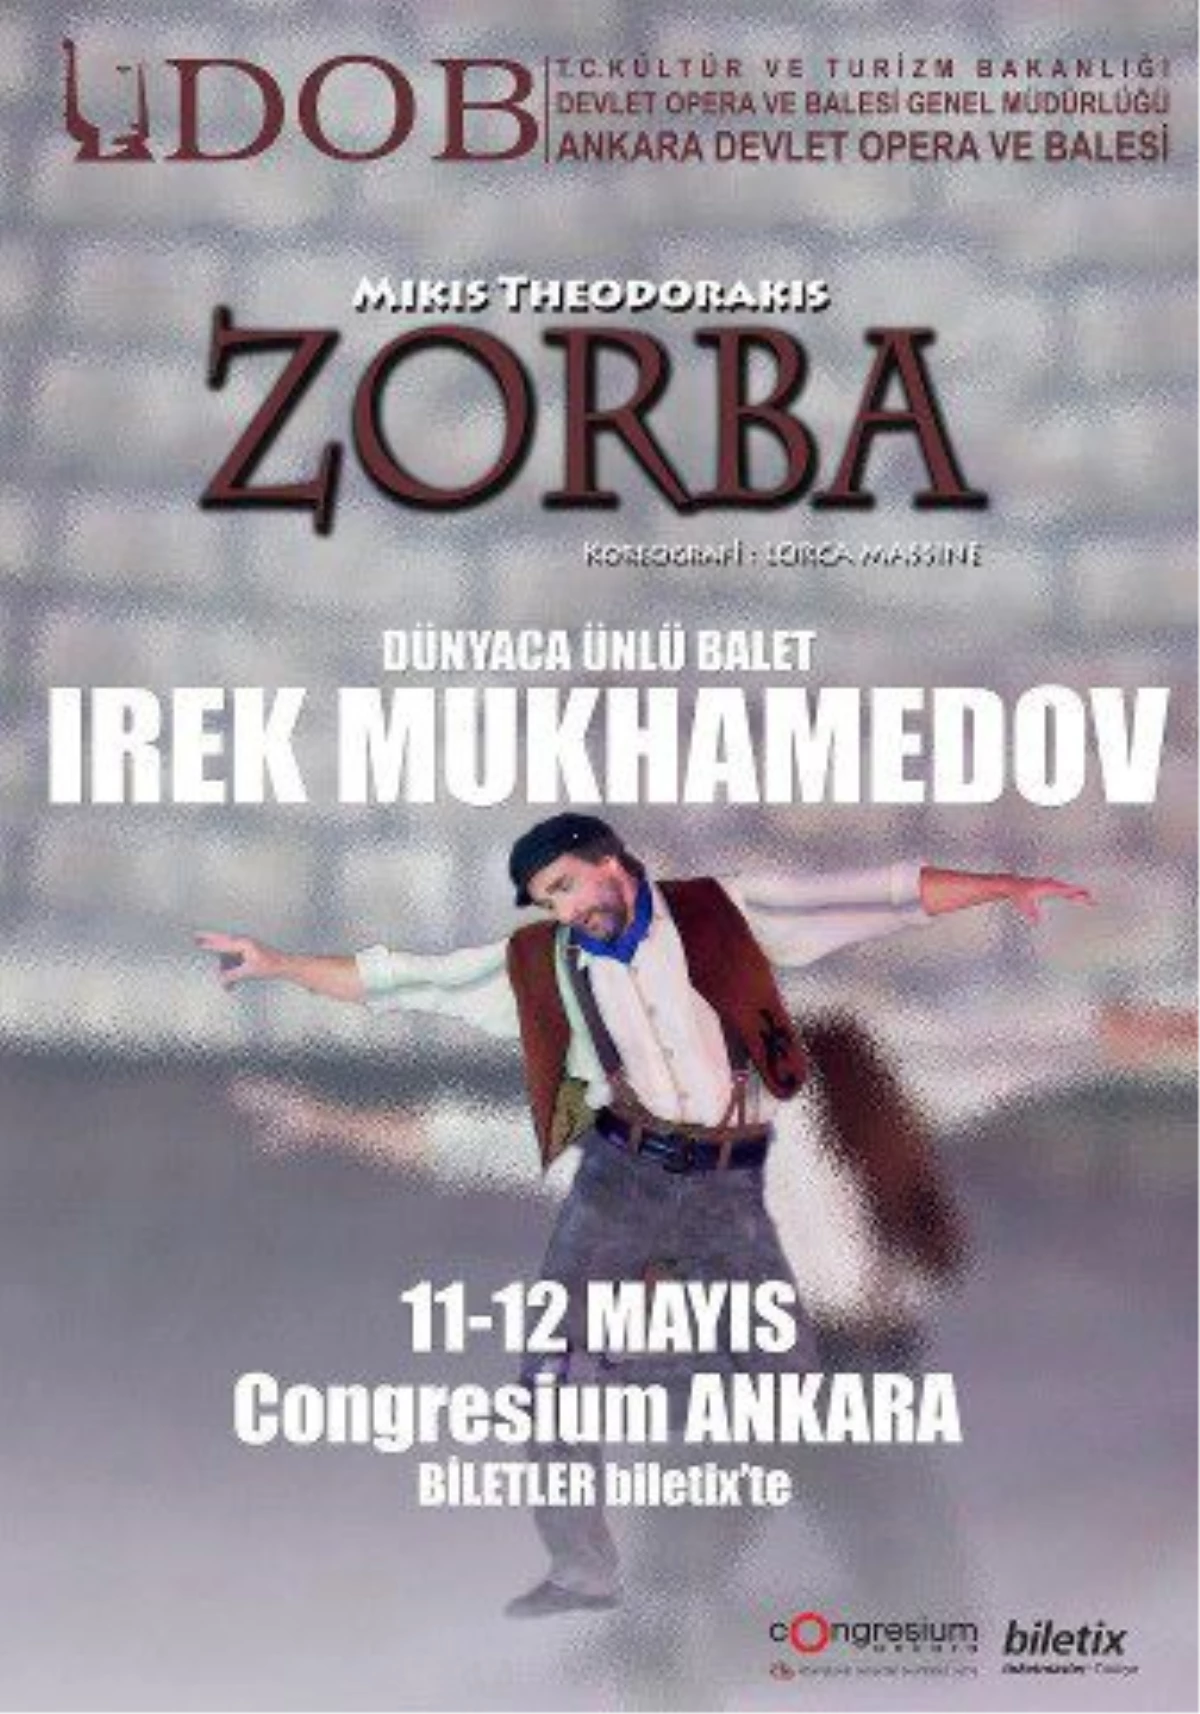 Irek Mukhamedov, Zorba ile Sahnede